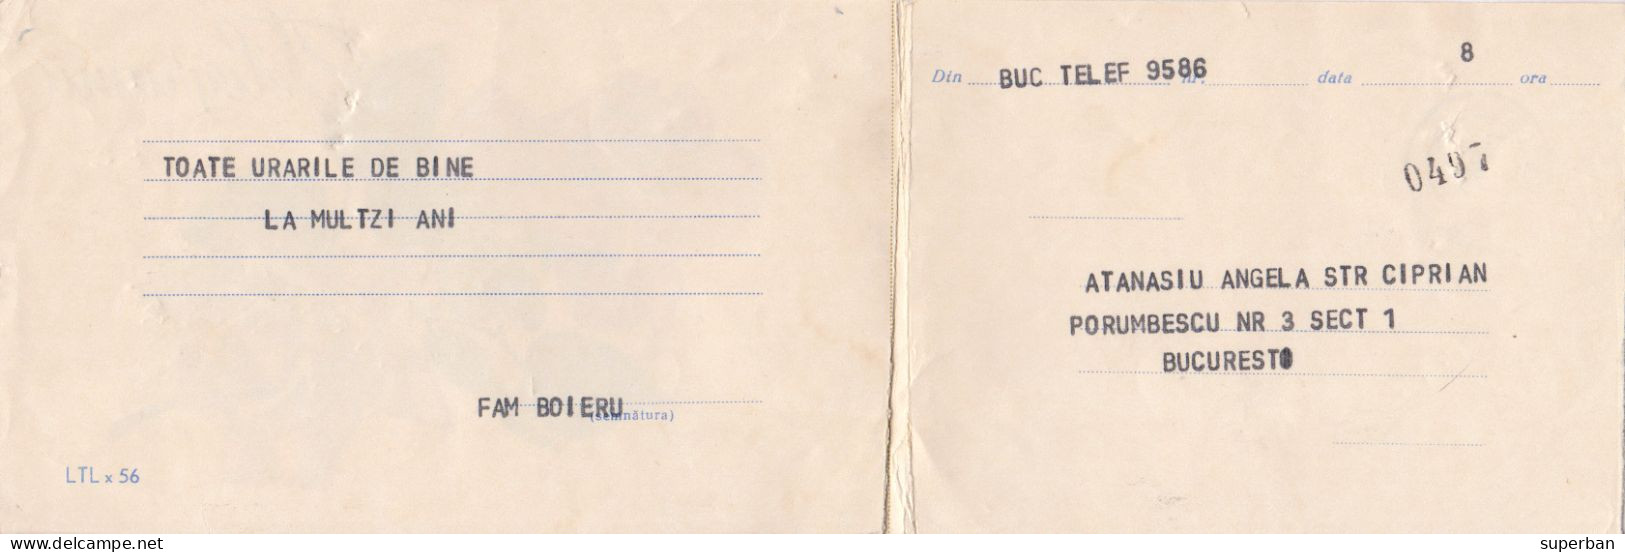 ROMÂNIA : TELEGRAMA De LUX - CIRCULATA / LUXURY TELEGRAM - USED / TÉLÉGRAMME De LUXE : 1968 - RRR ! (an676) - Postal Stationery